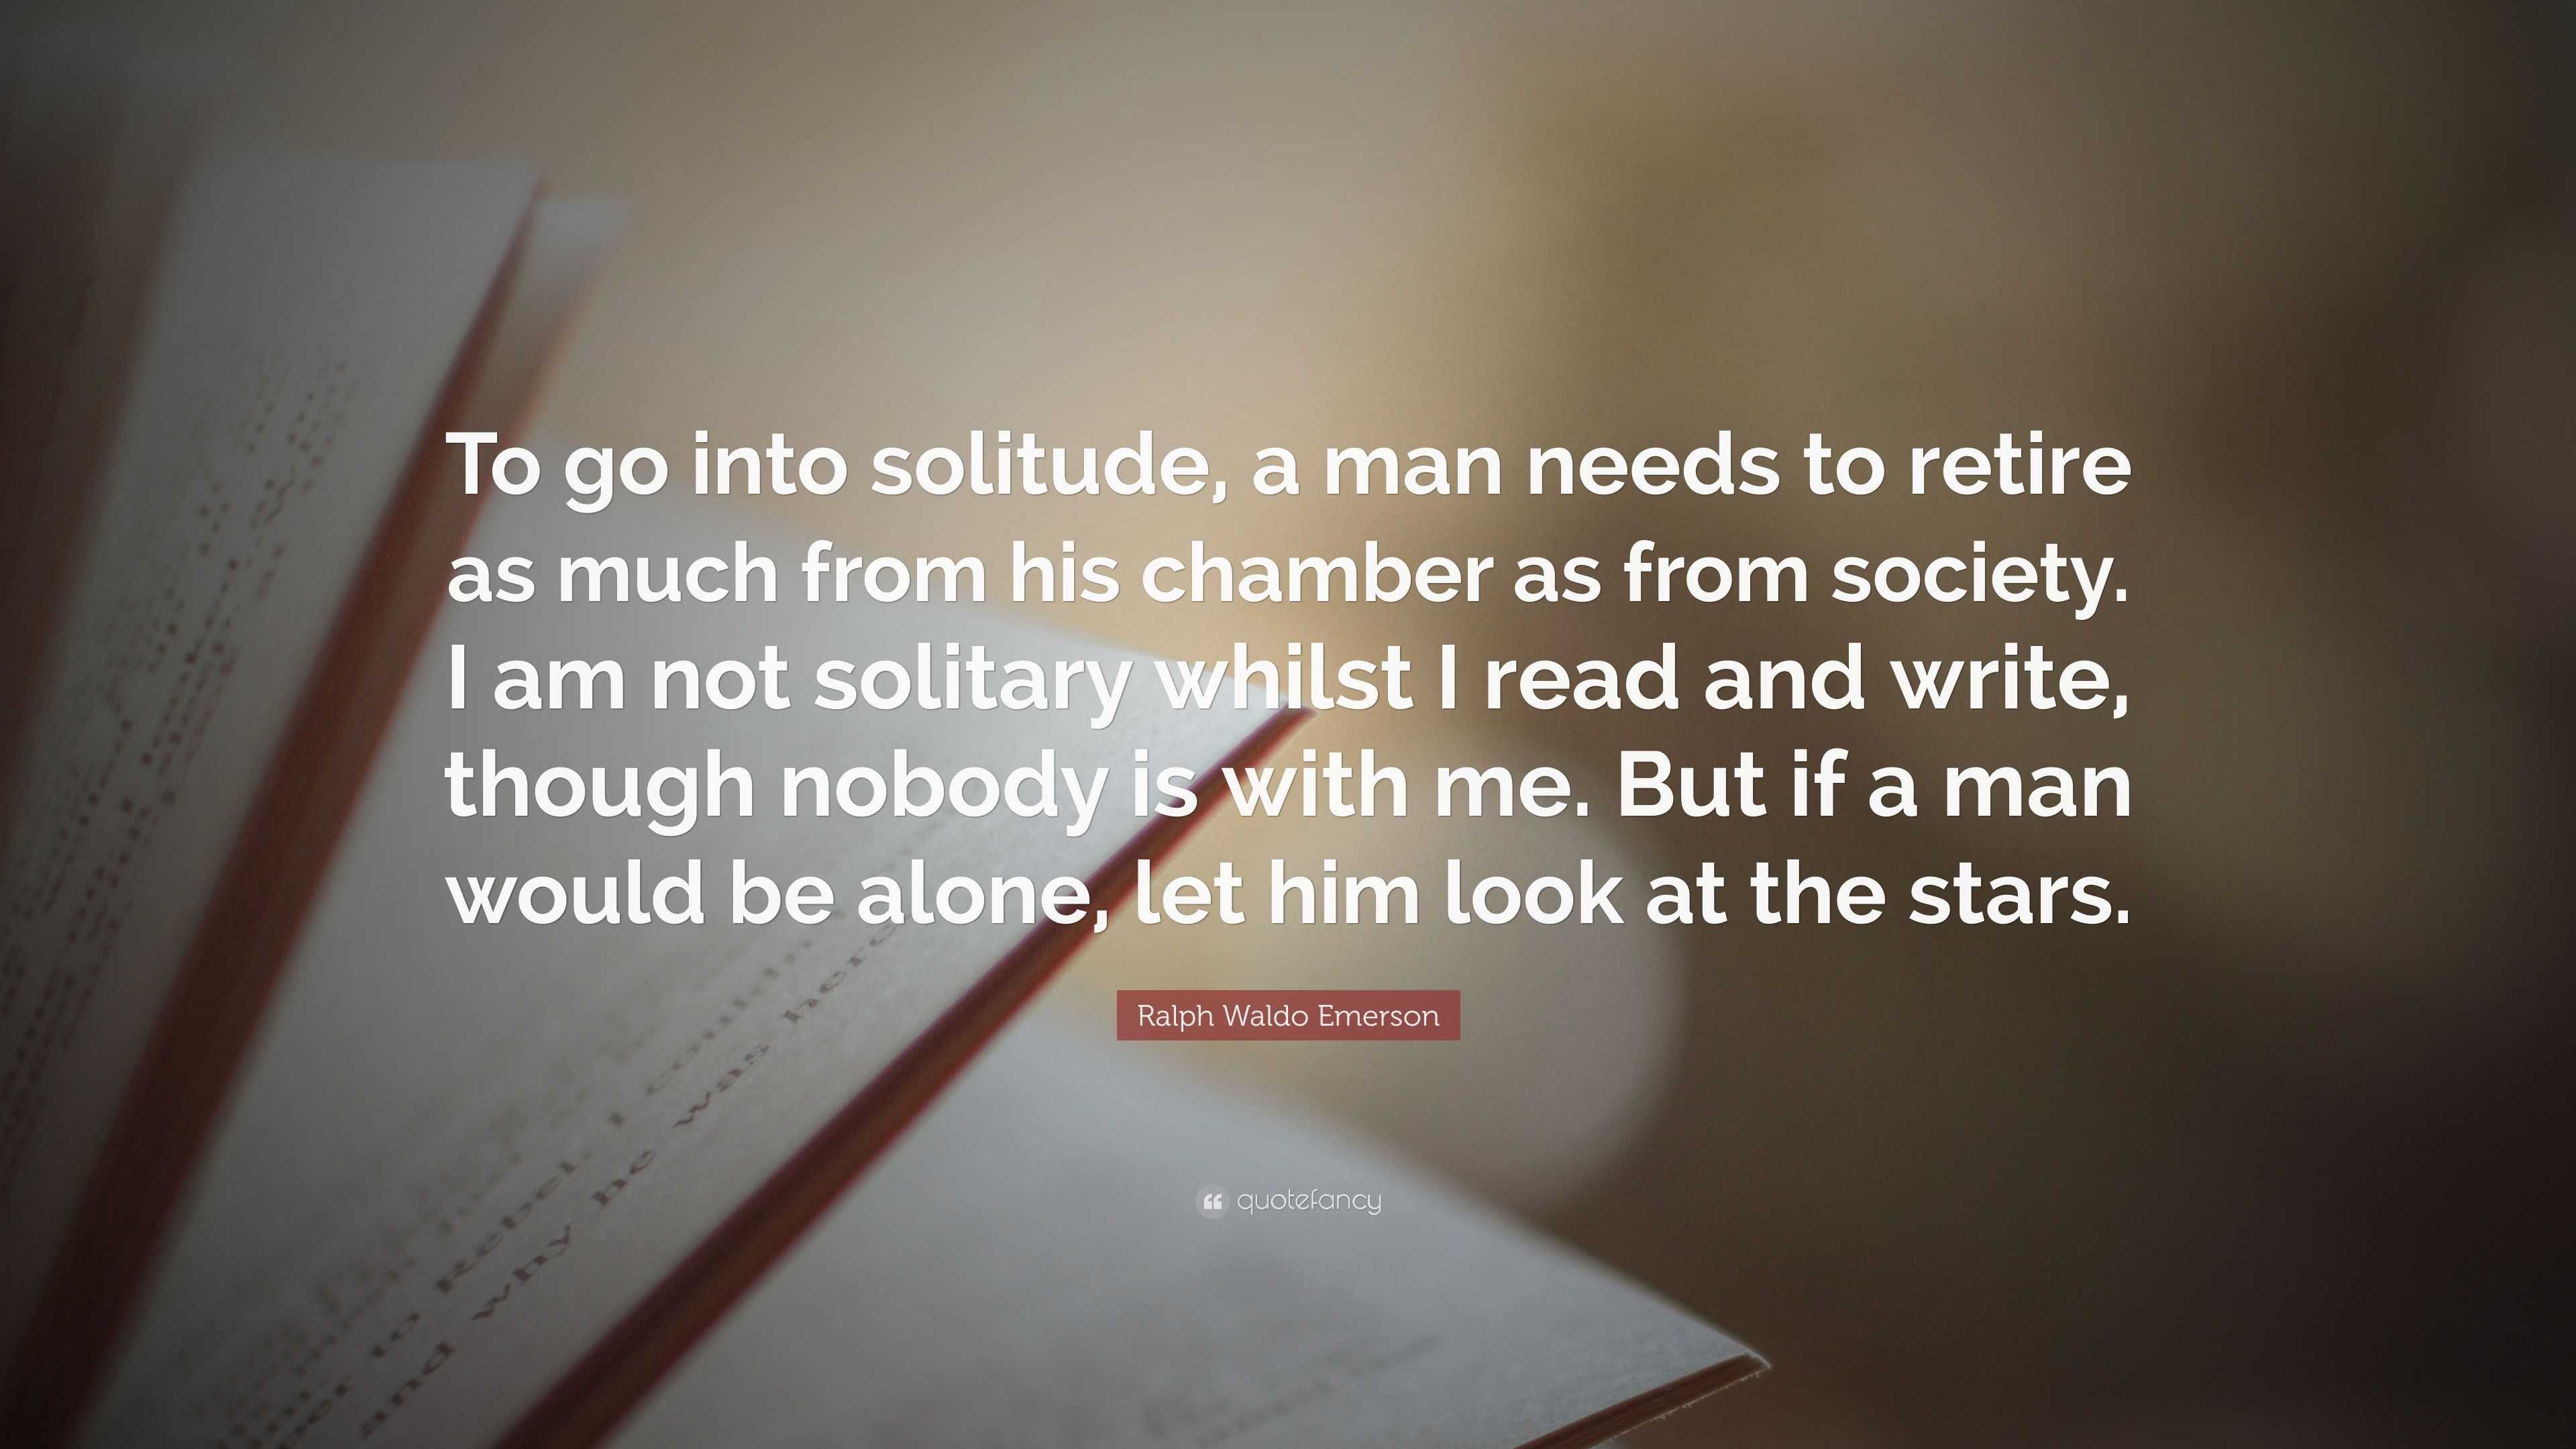 Ralph Waldo Emerson Quote: “To go into solitude, a man needs to retire ...